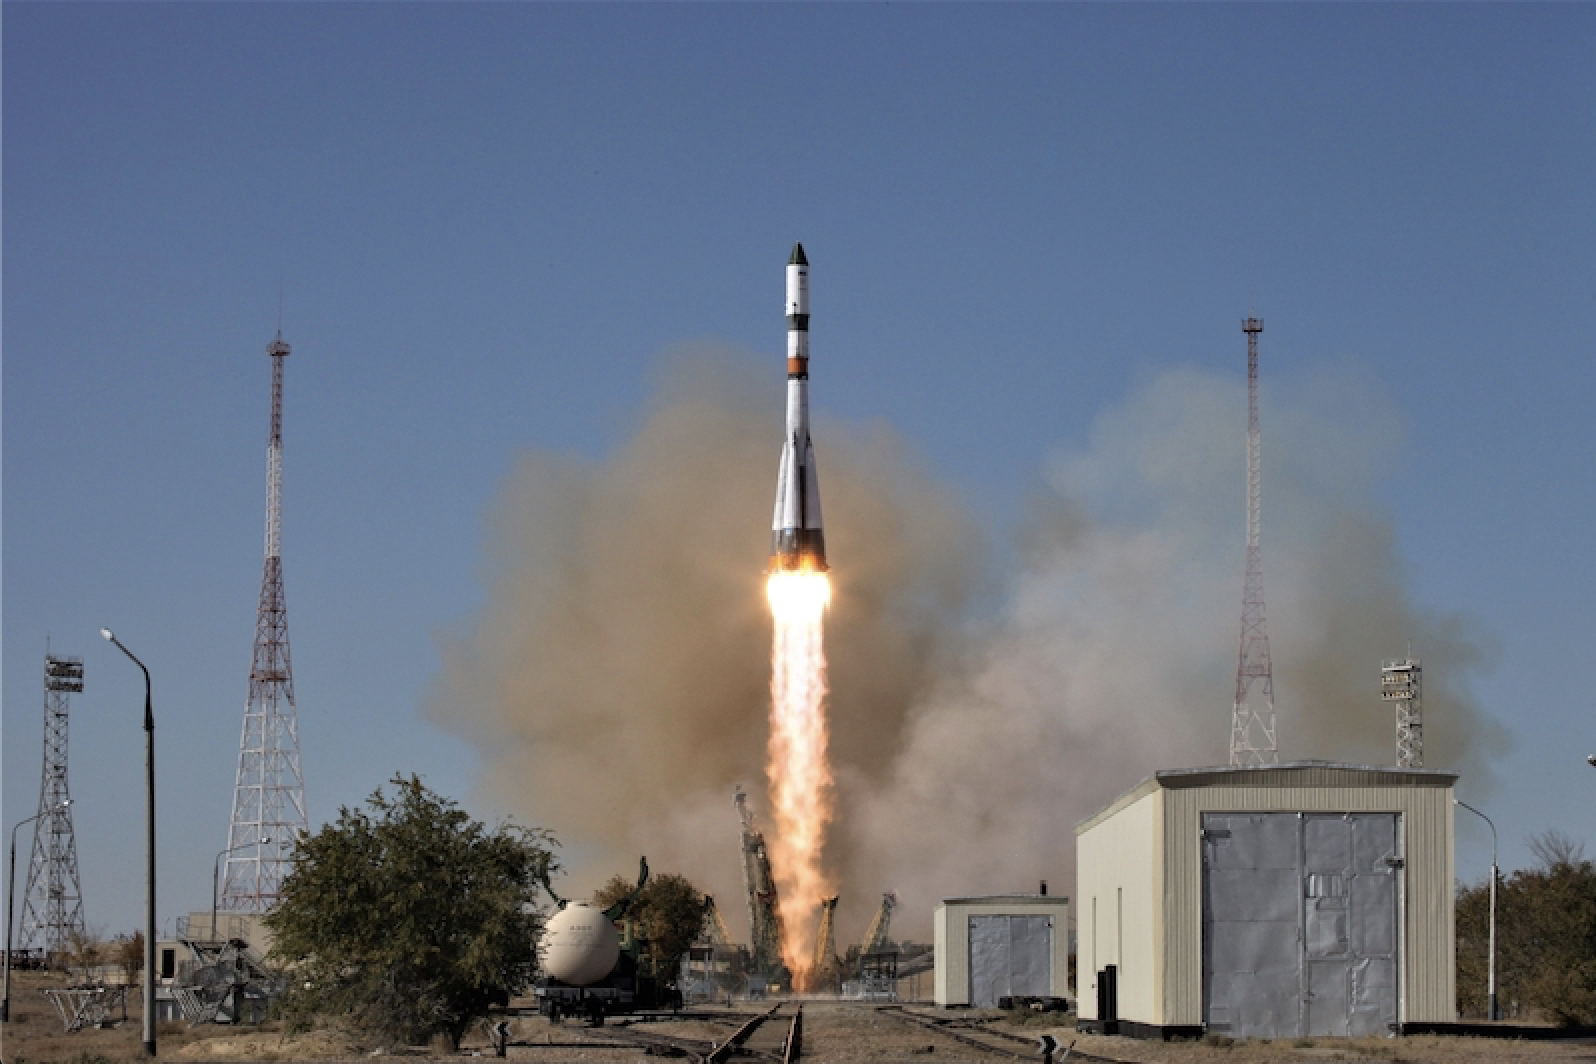 A white, skinny rocket shoots up into a pale blue sky from a desert landscape.